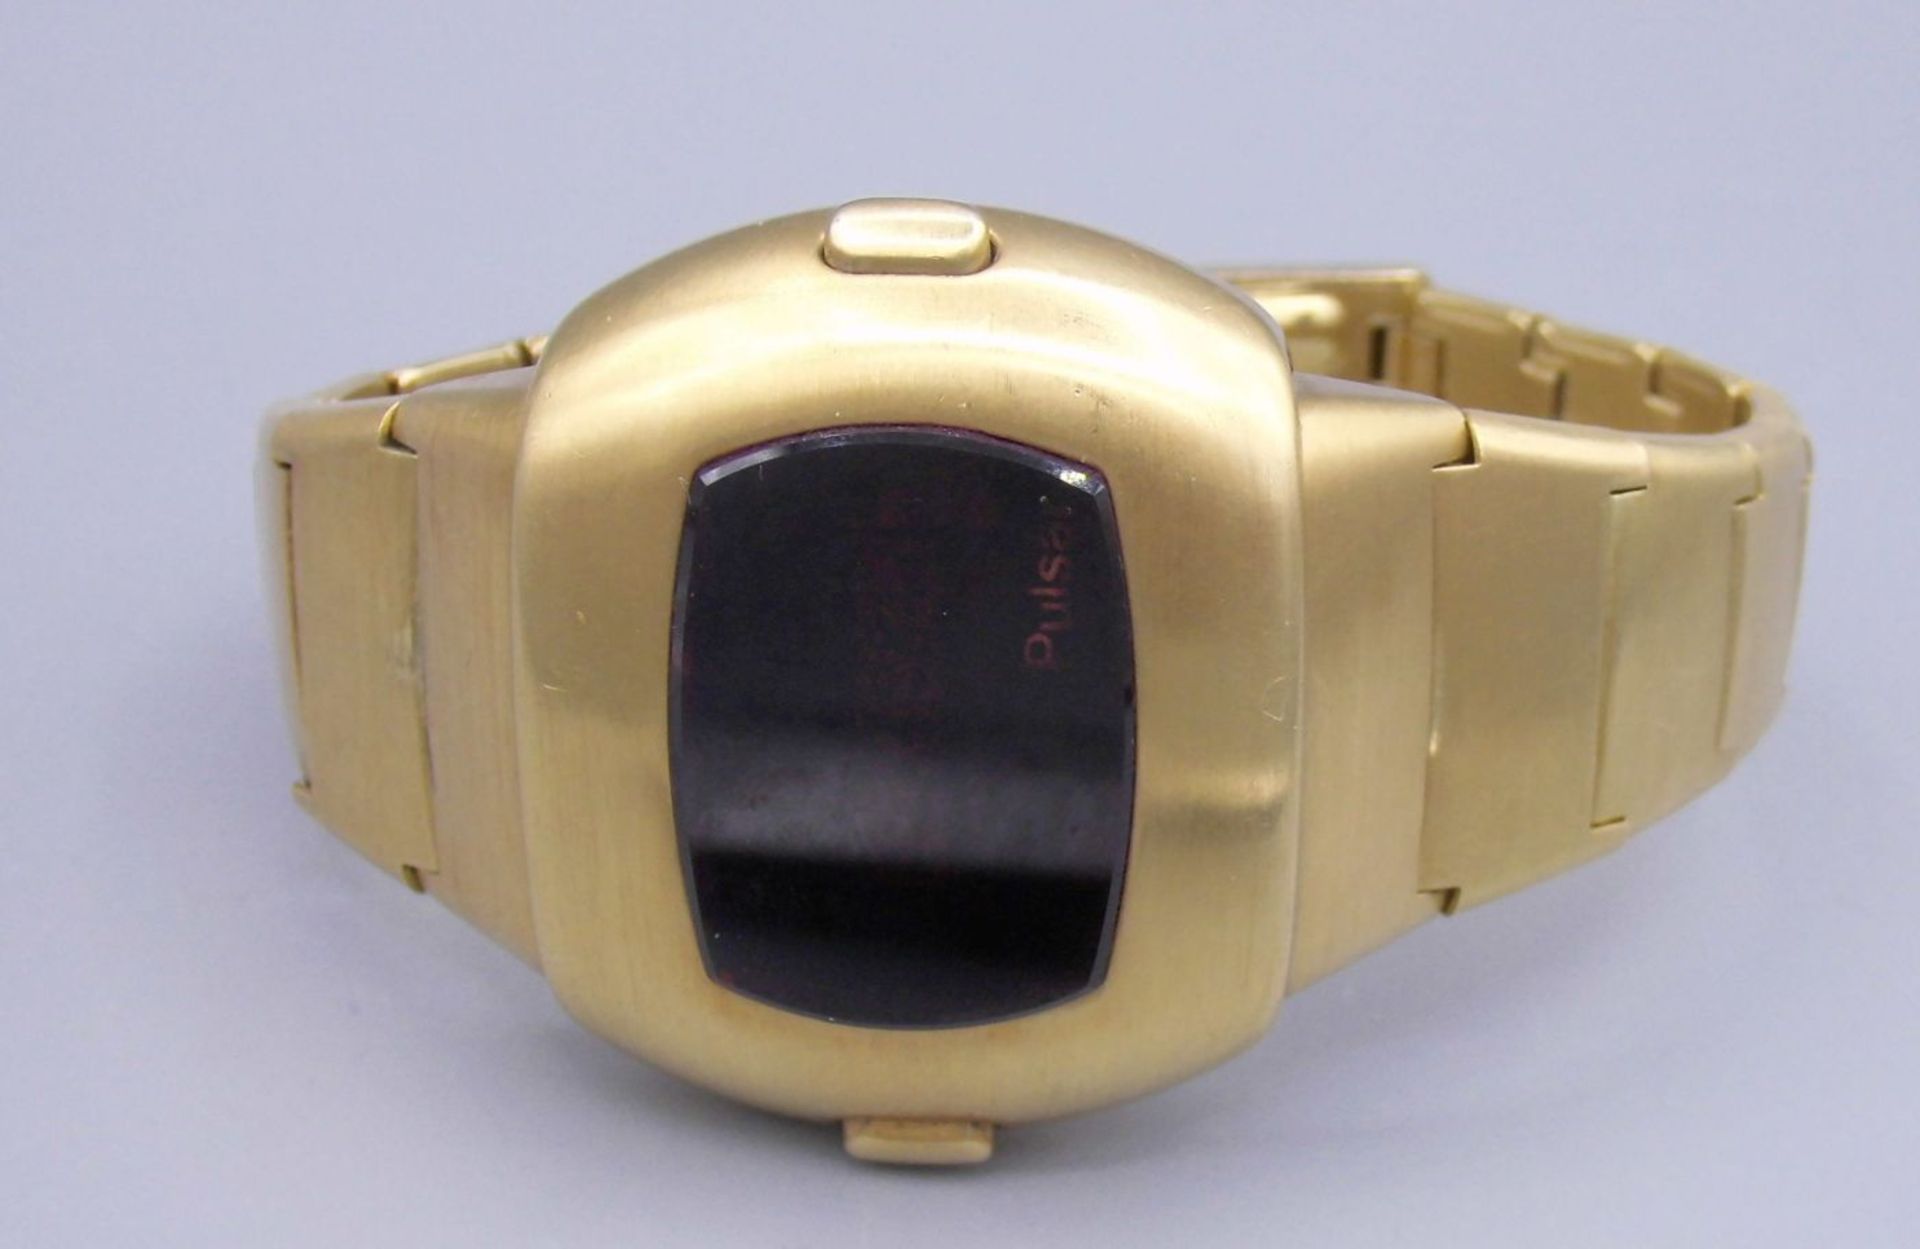 GOLDENE ARMBANDUHR / DIGITALUHR : Pulsar P3 "Date Command" / digital watch, 1970er Jahre, Gehäuse - Bild 2 aus 7